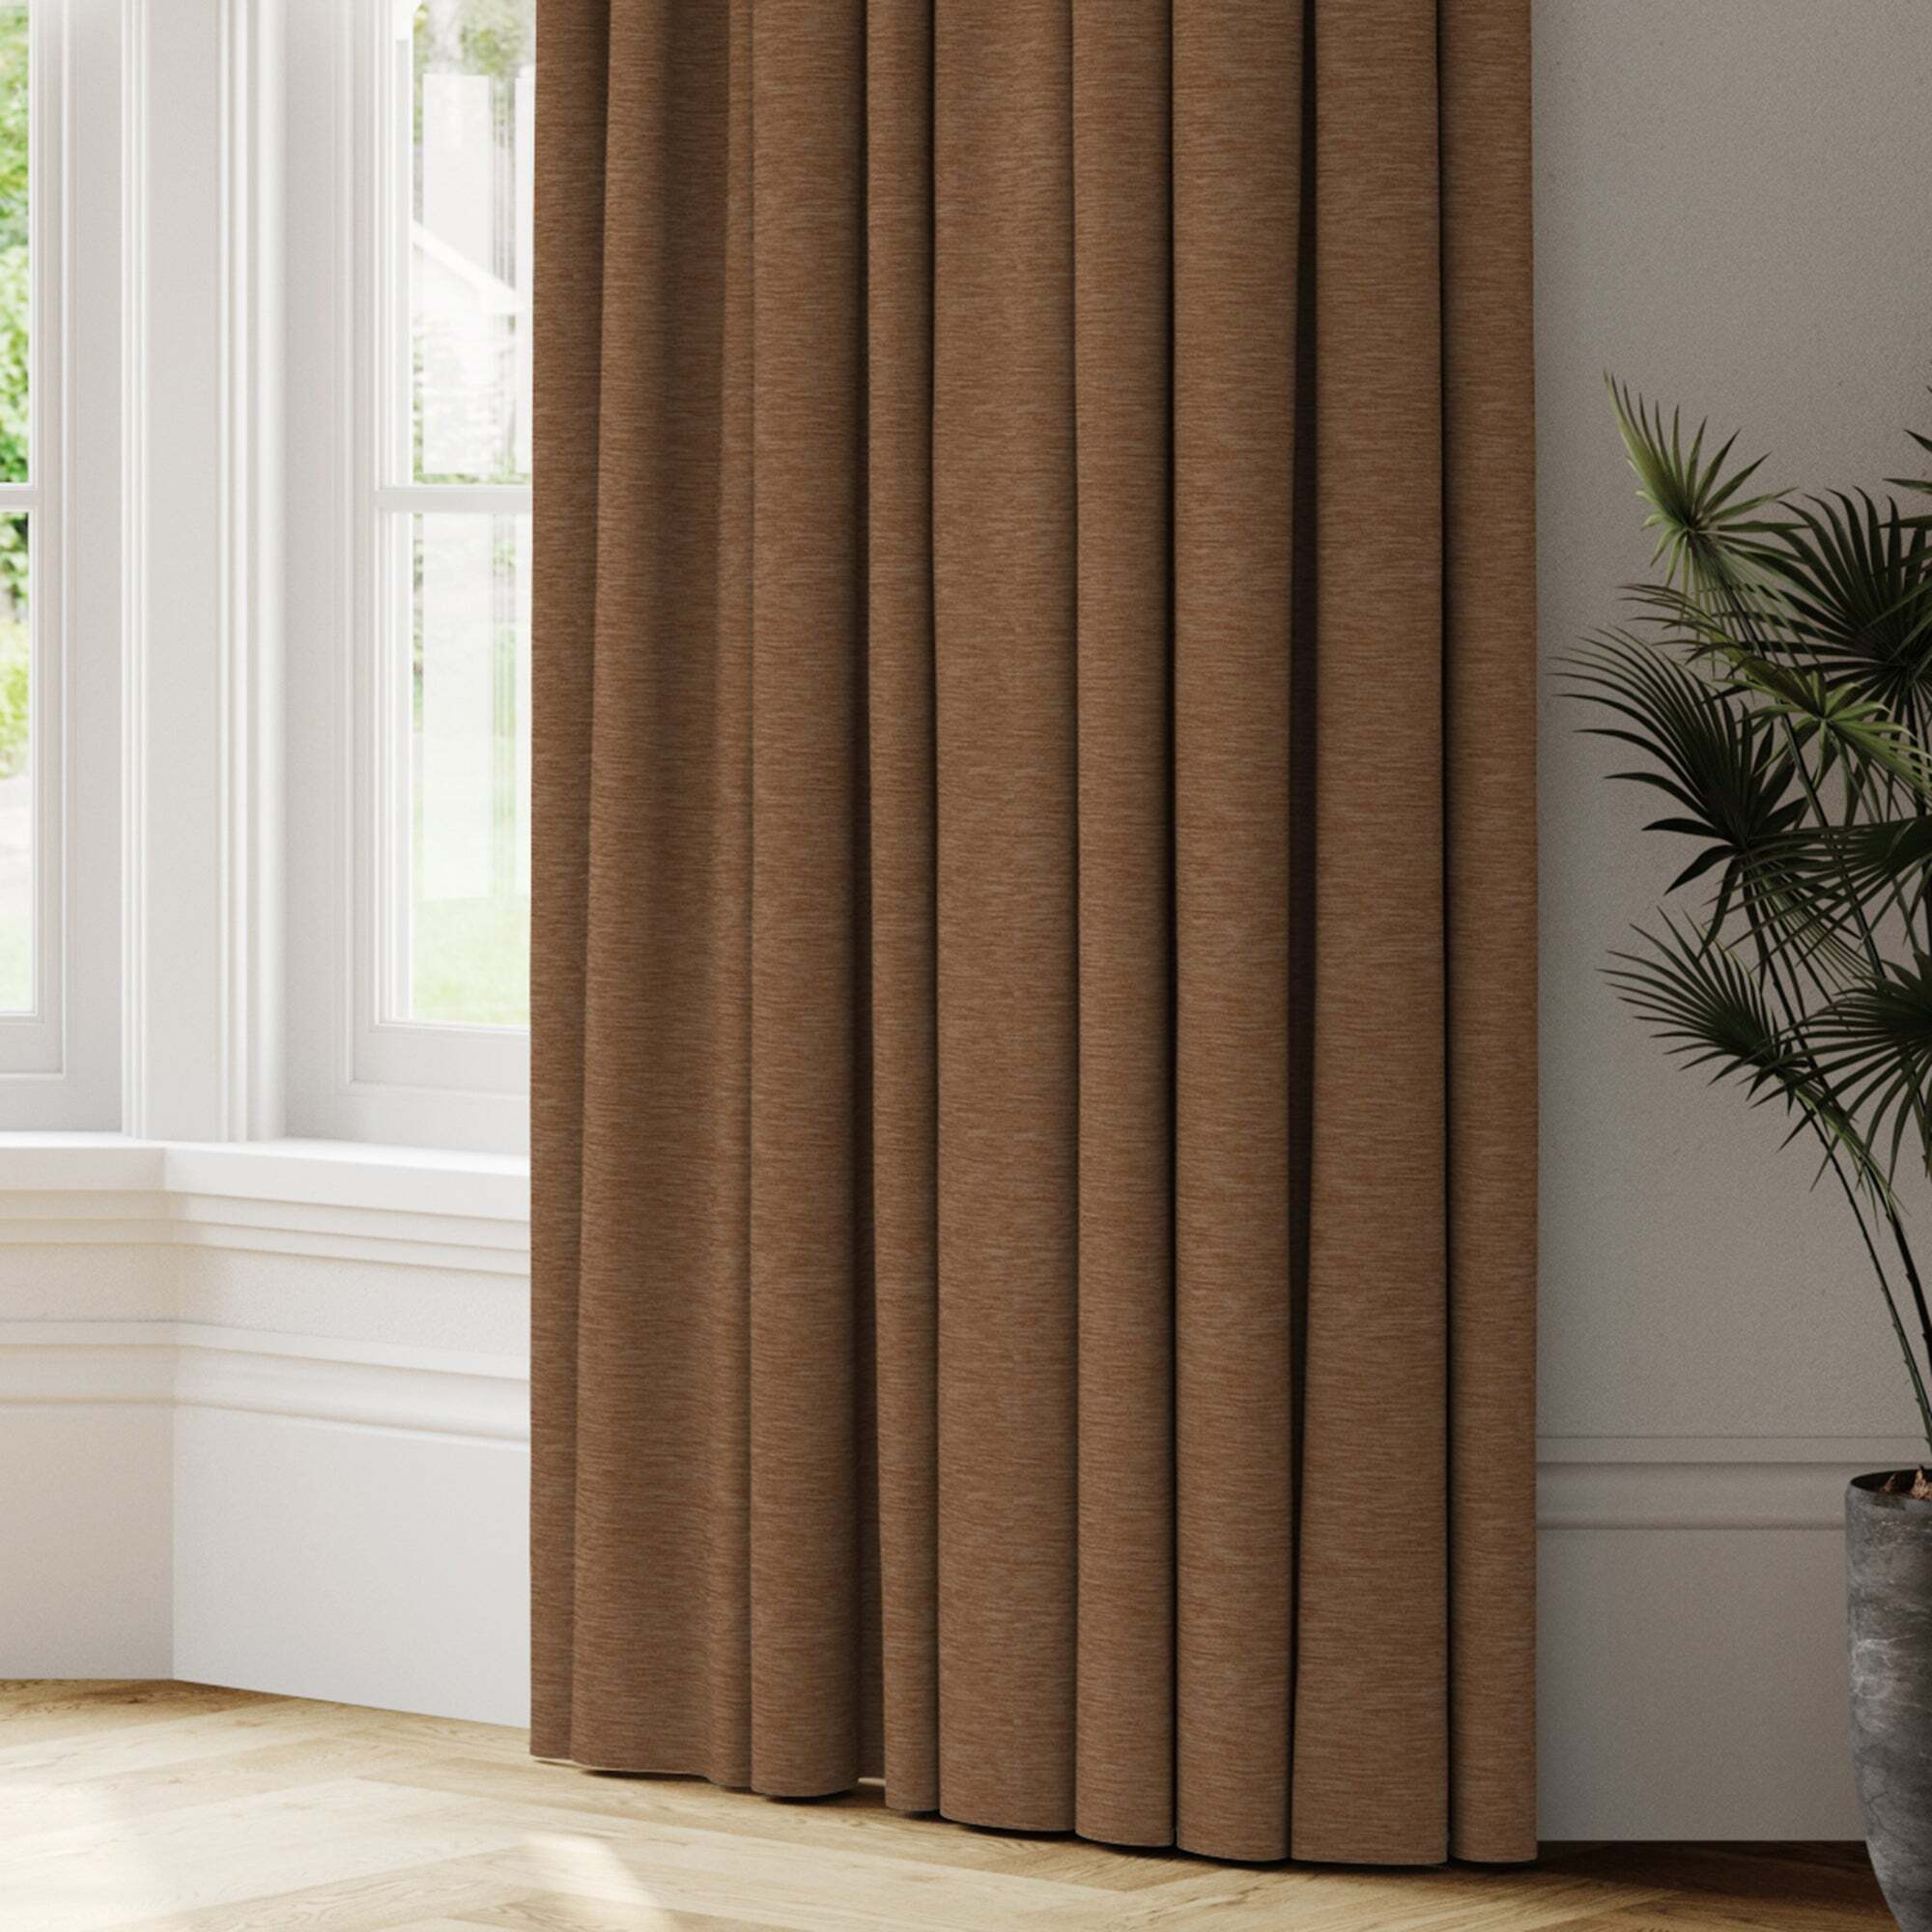 Kensington Made to Measure Curtains natural